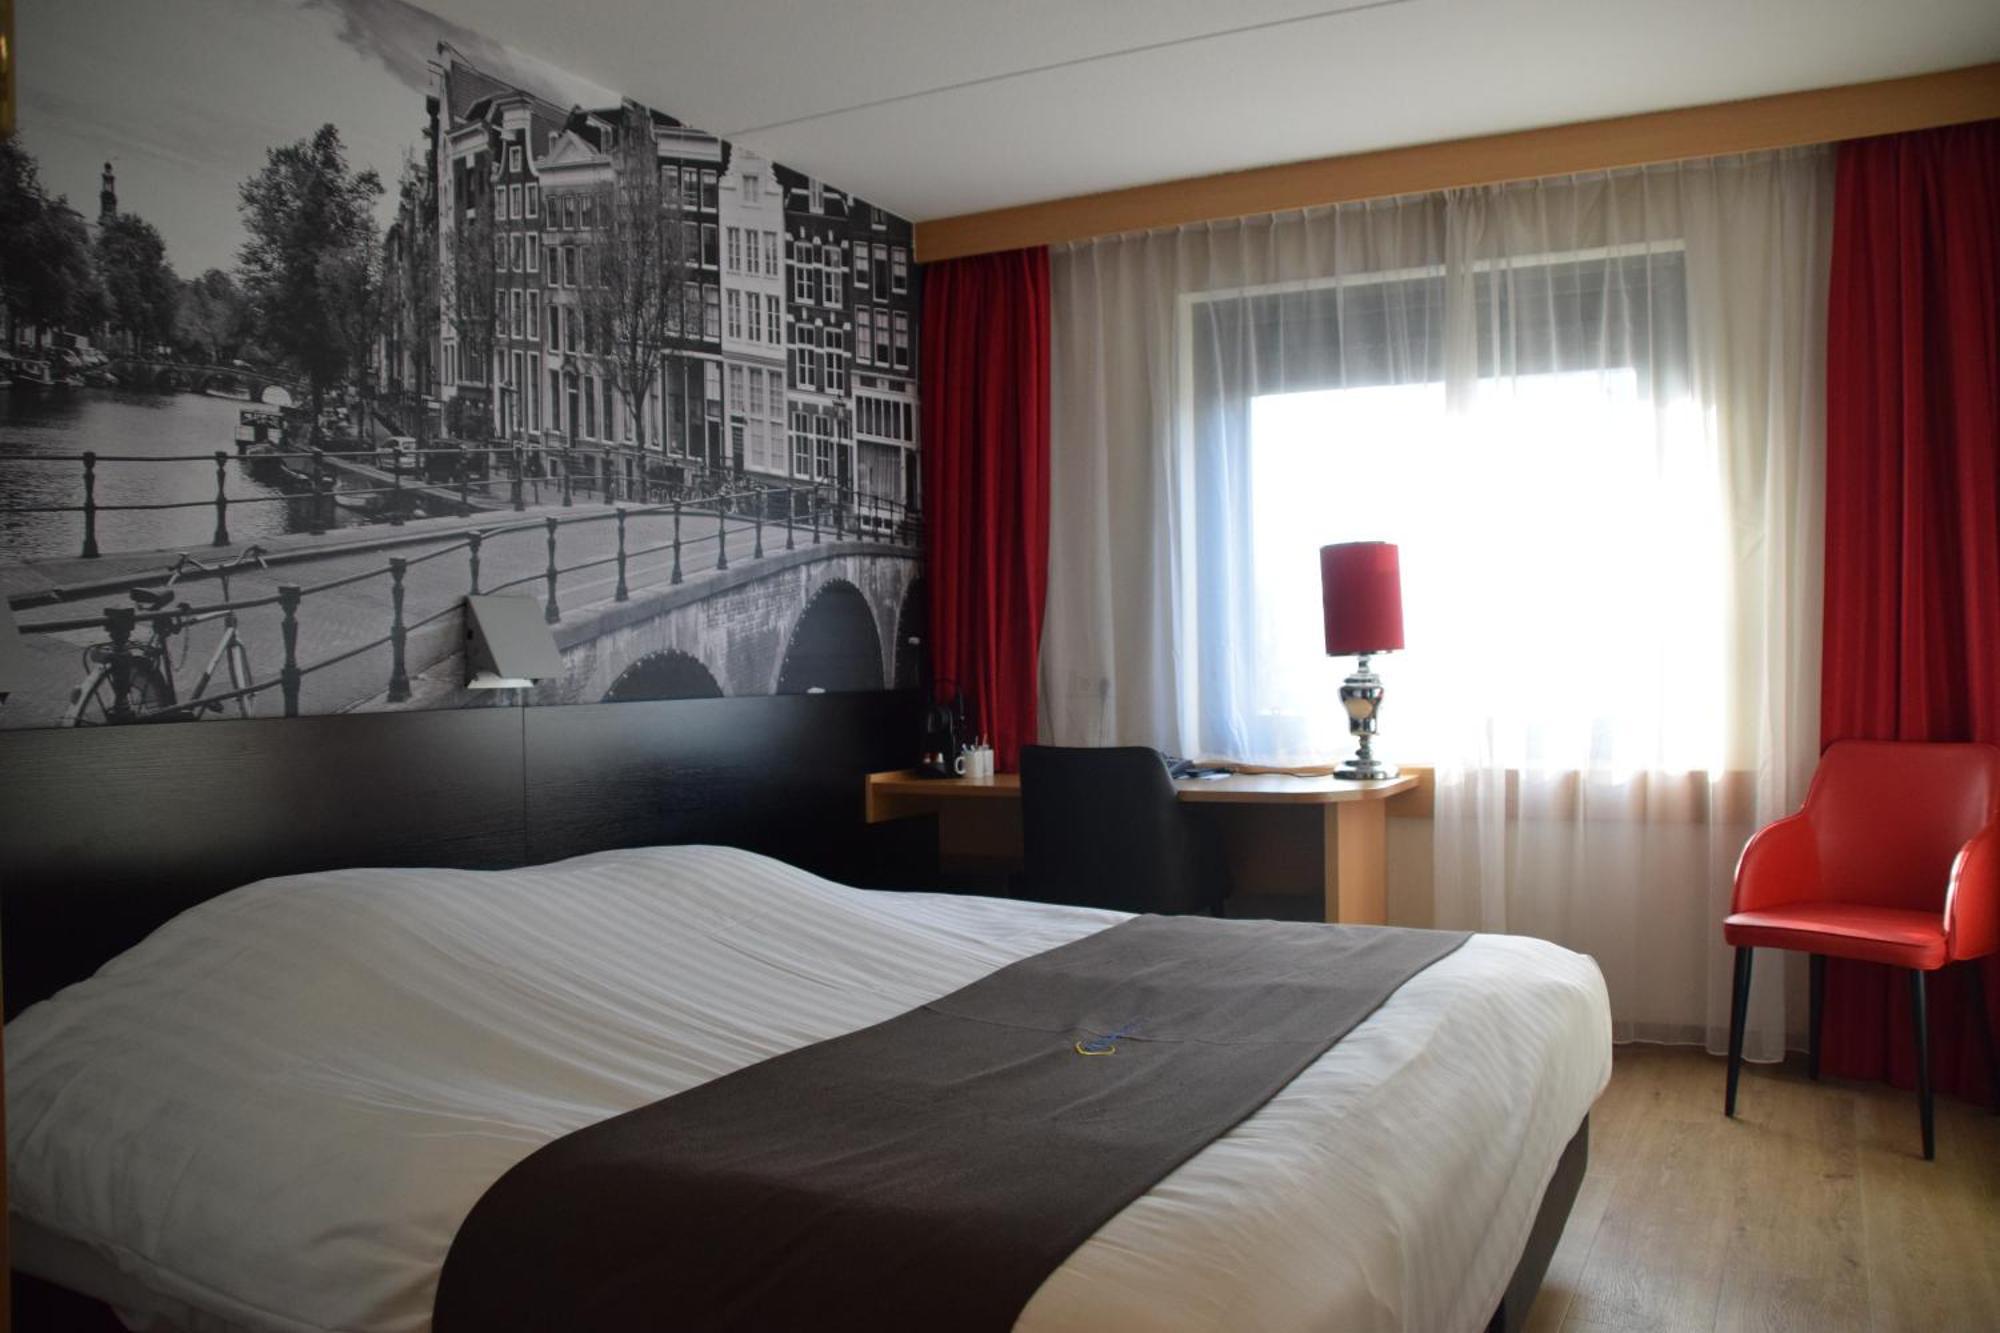 Bastion Hotel Leiden Voorschoten Dış mekan fotoğraf